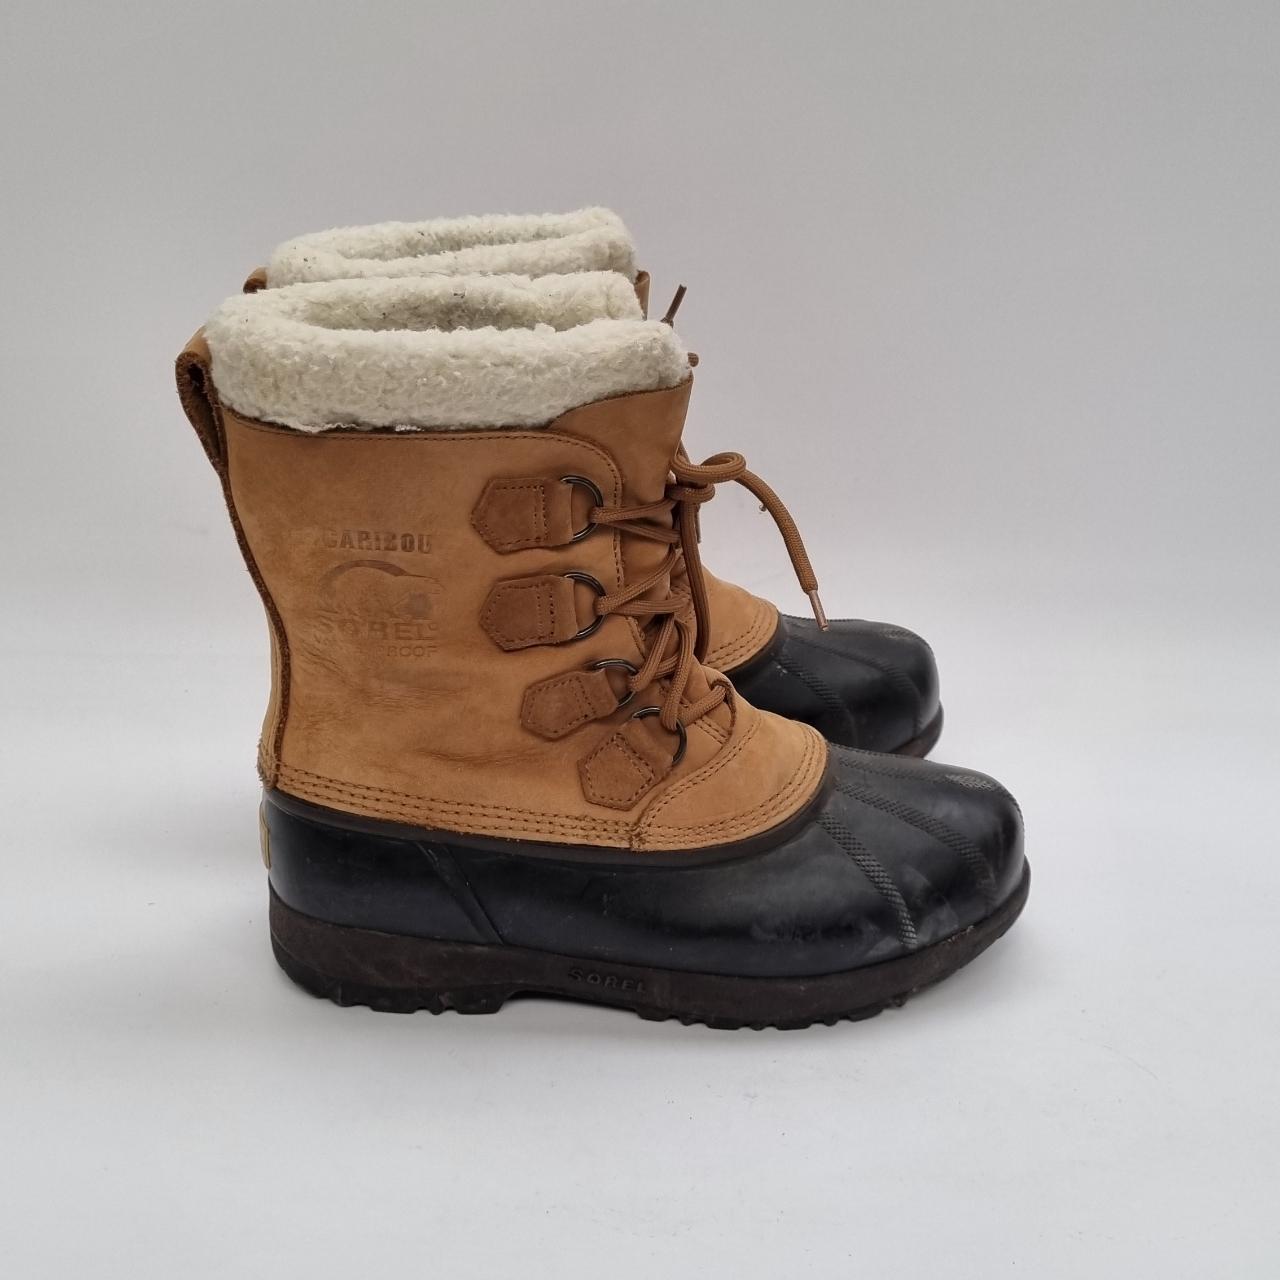 Sorel Caribou Outdoor boots Light Tan suede Rubber... - Depop